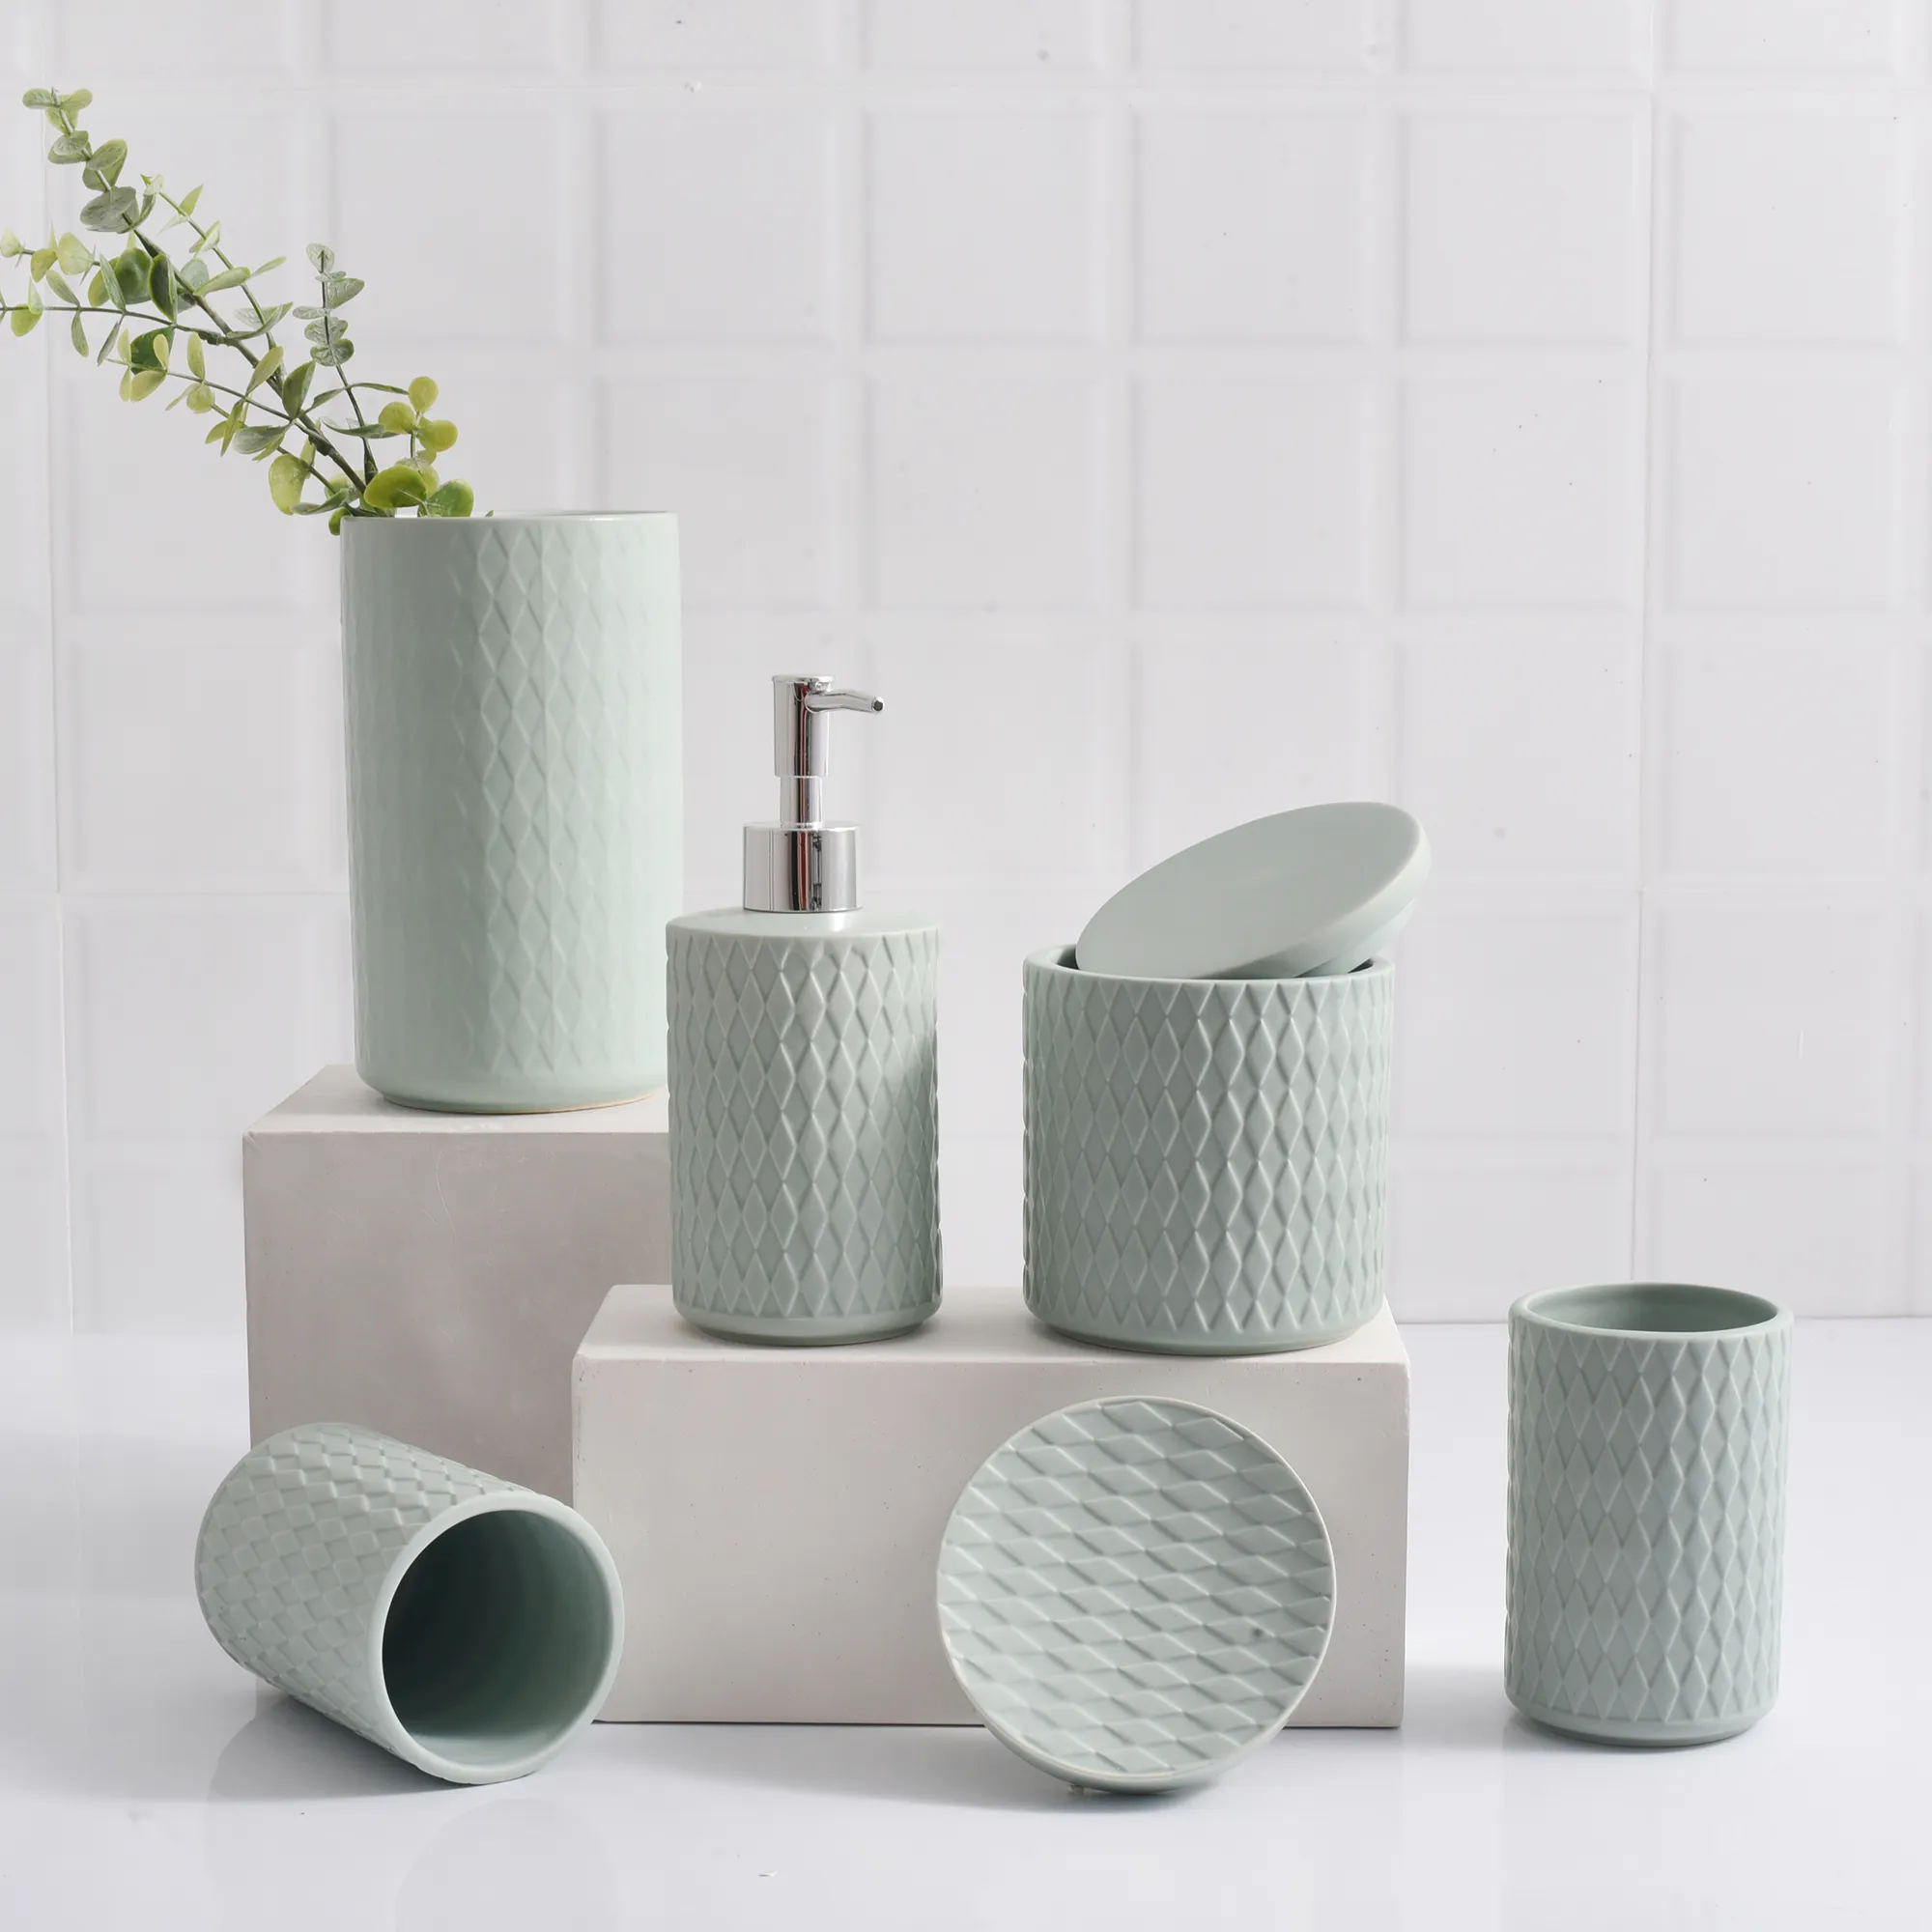 Luxury ceramic bathroom decor accessories set Bathroom Products Accessories